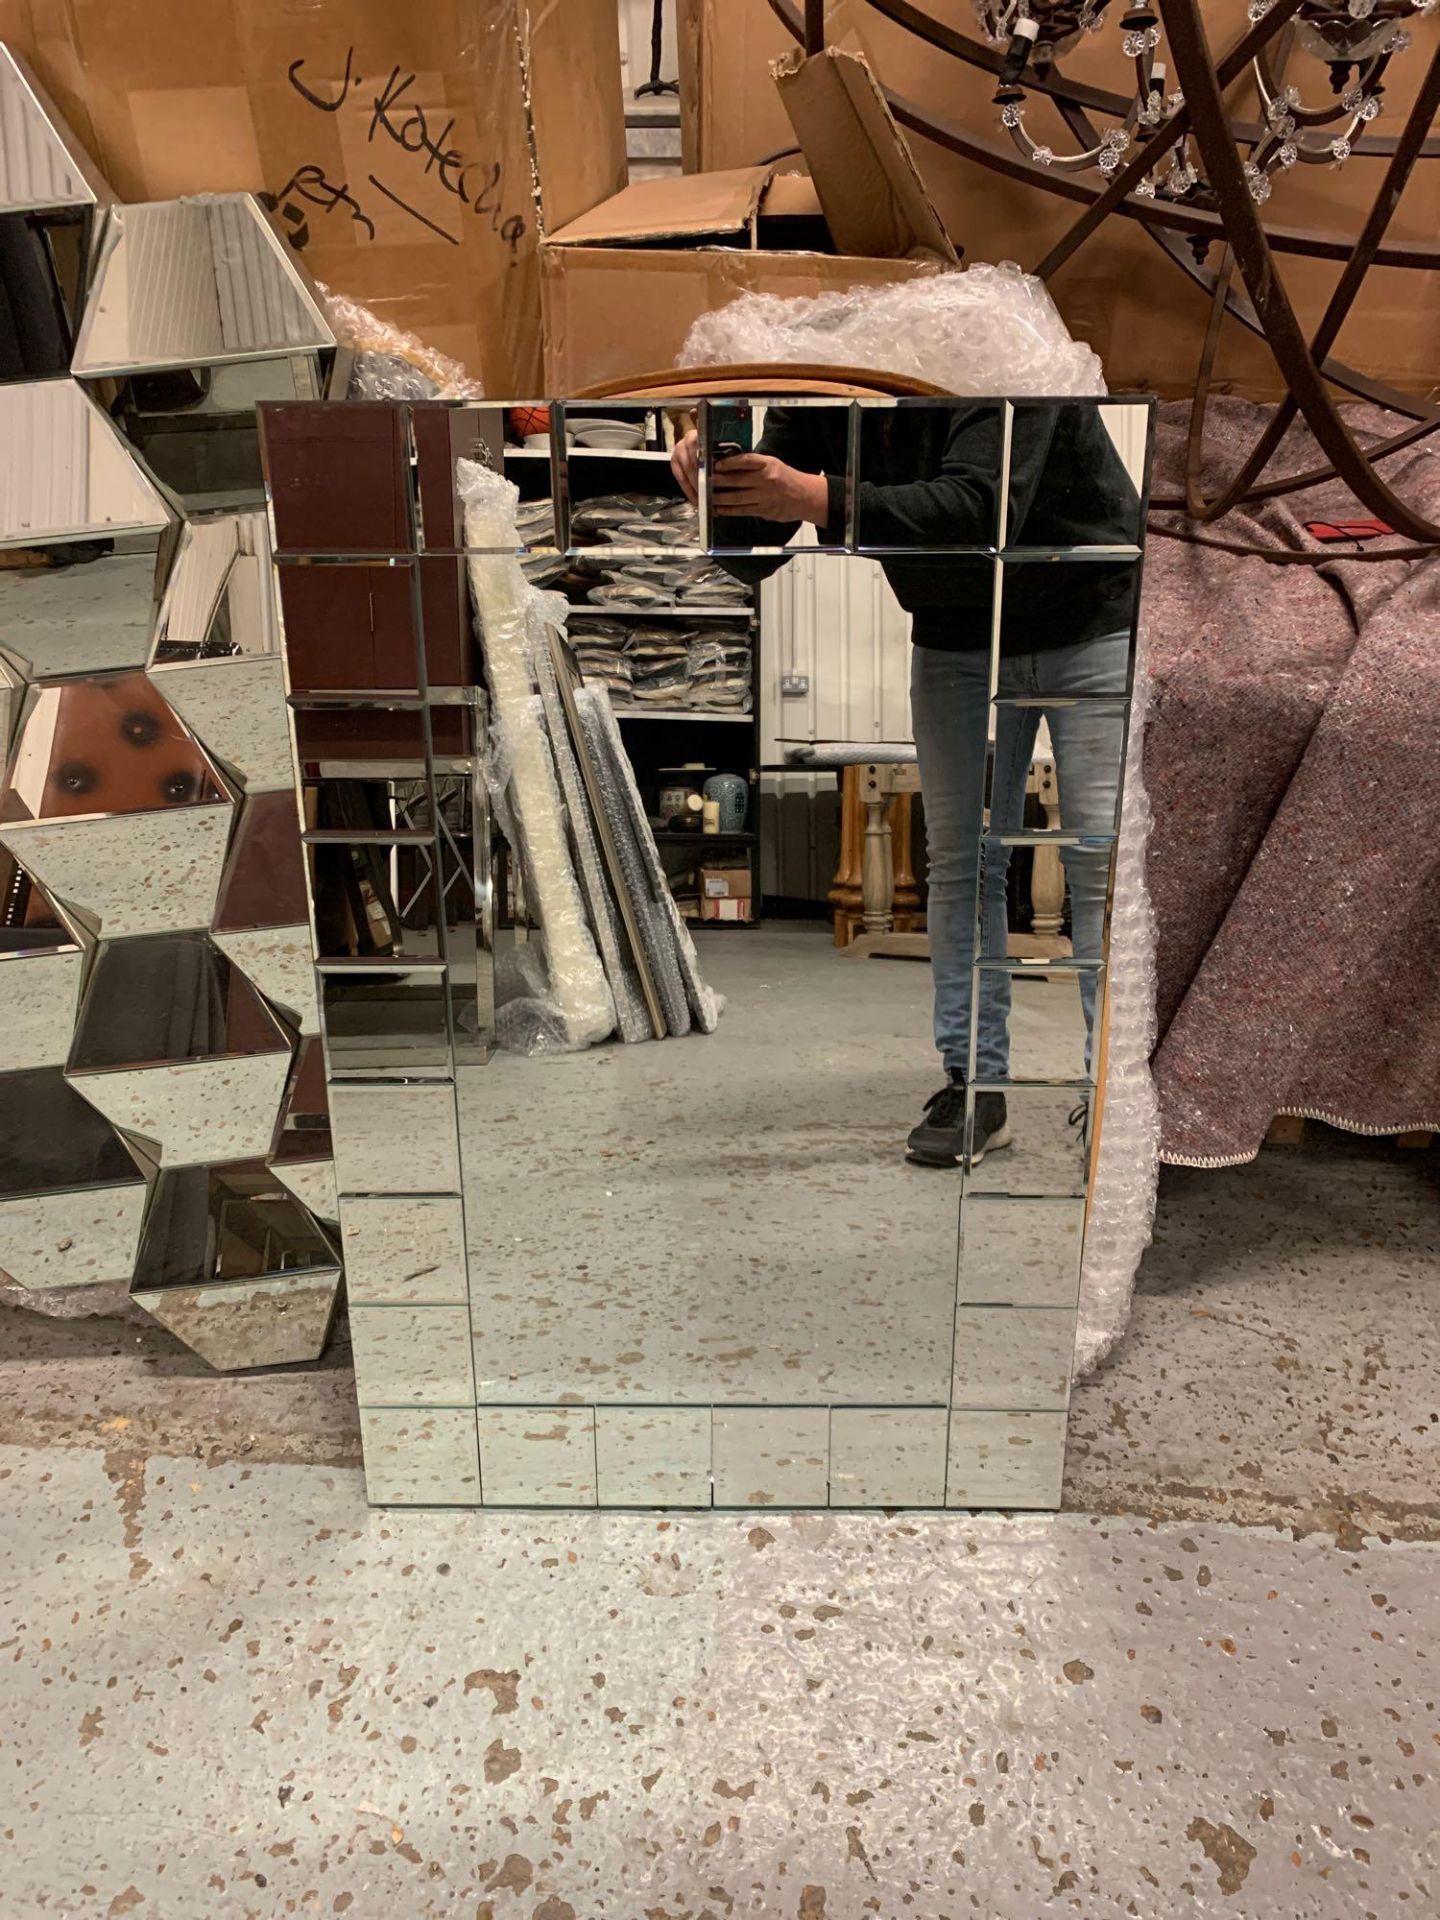 Alfredo rectangle mirror - Image 3 of 4